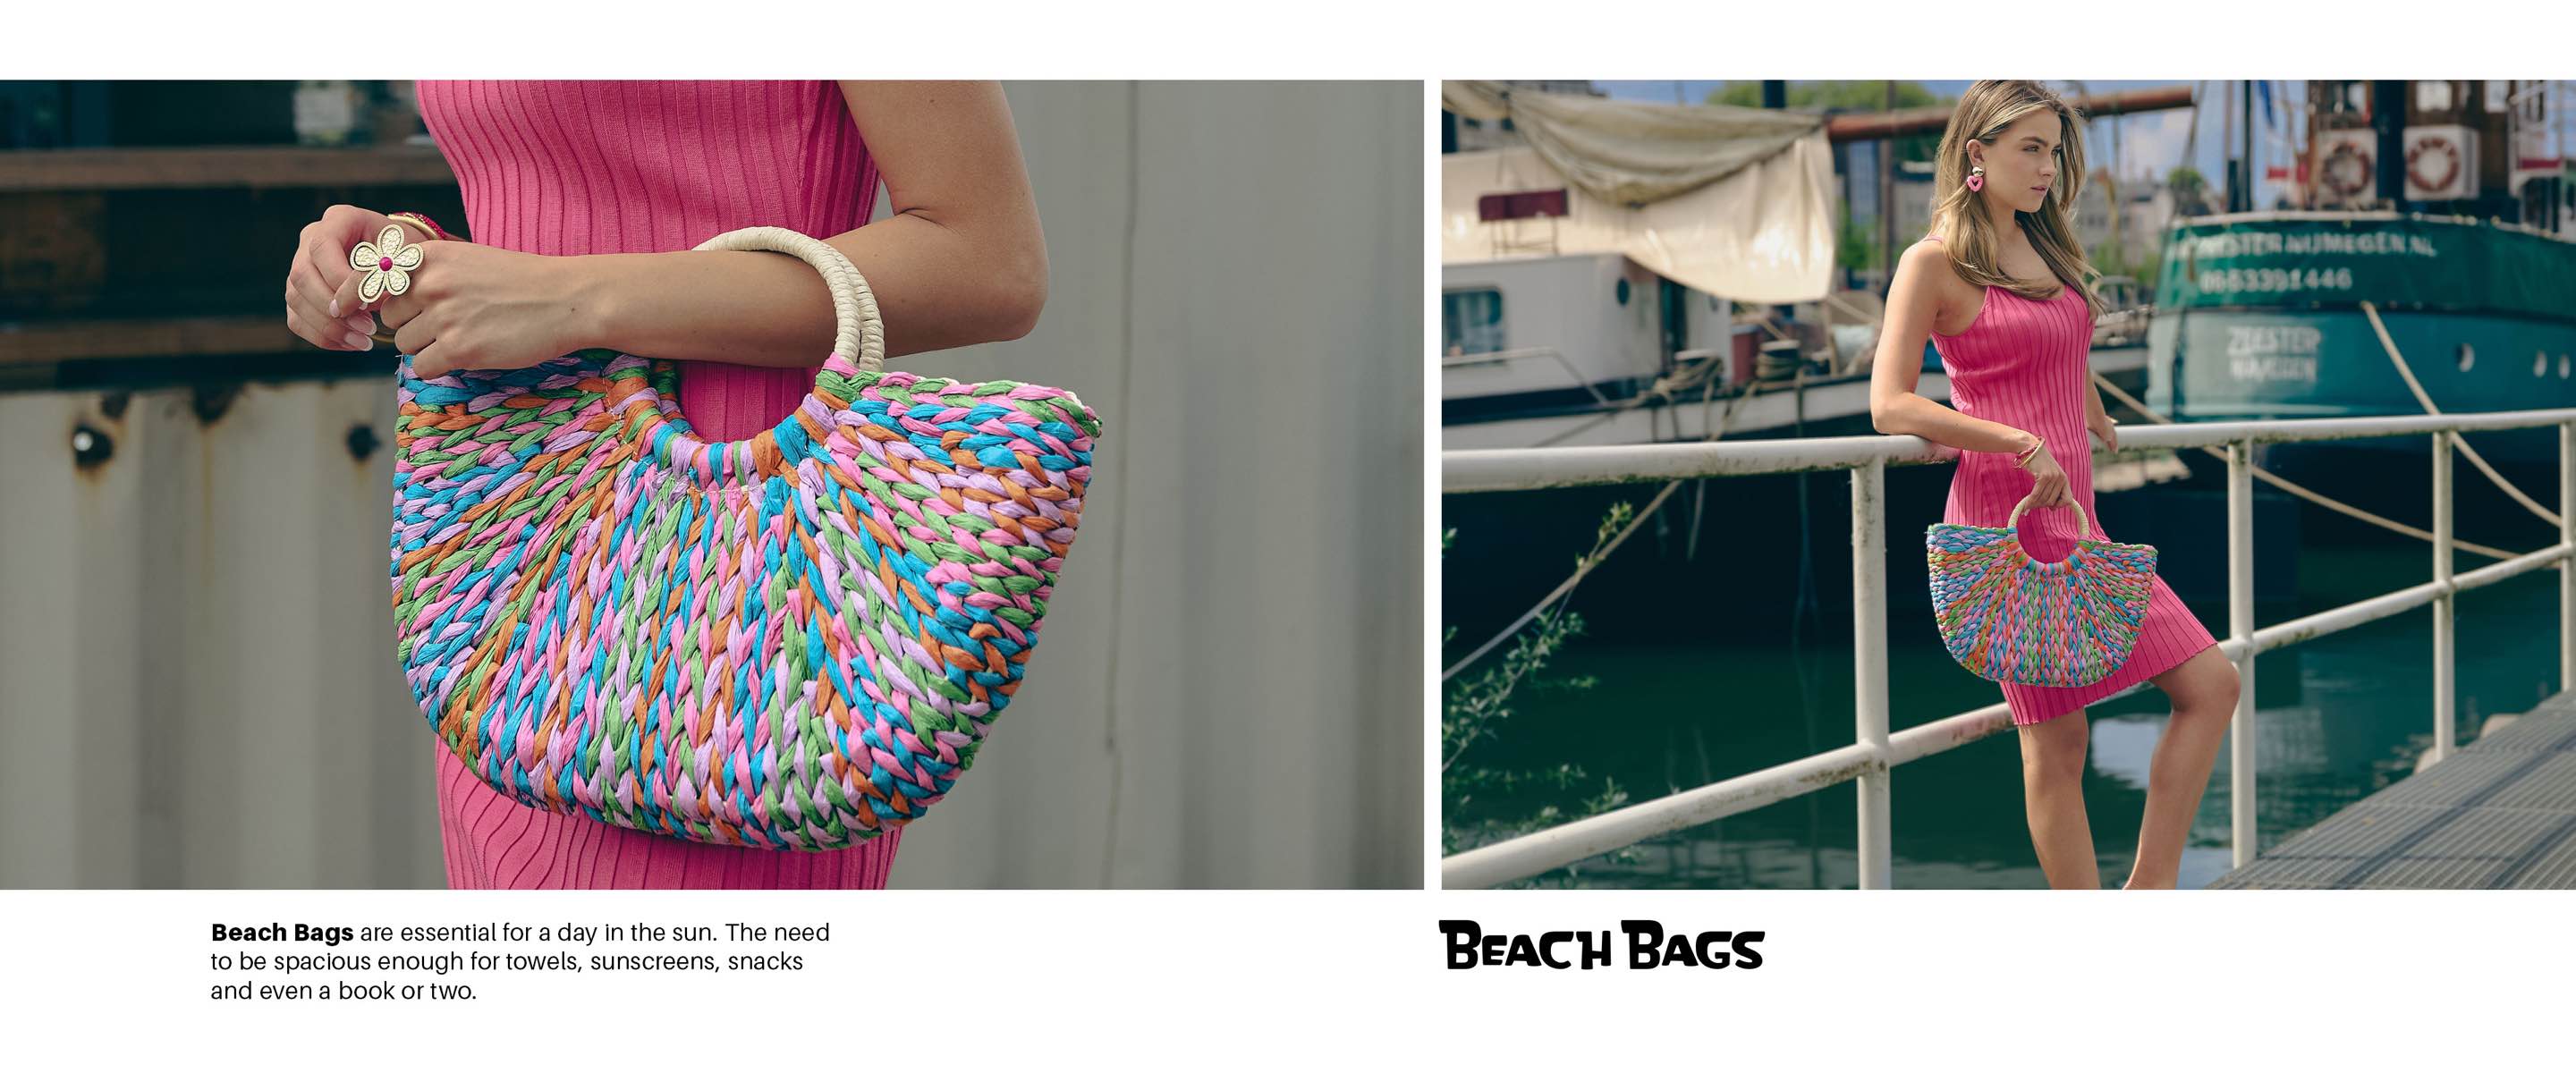 Beach Bags Image 0